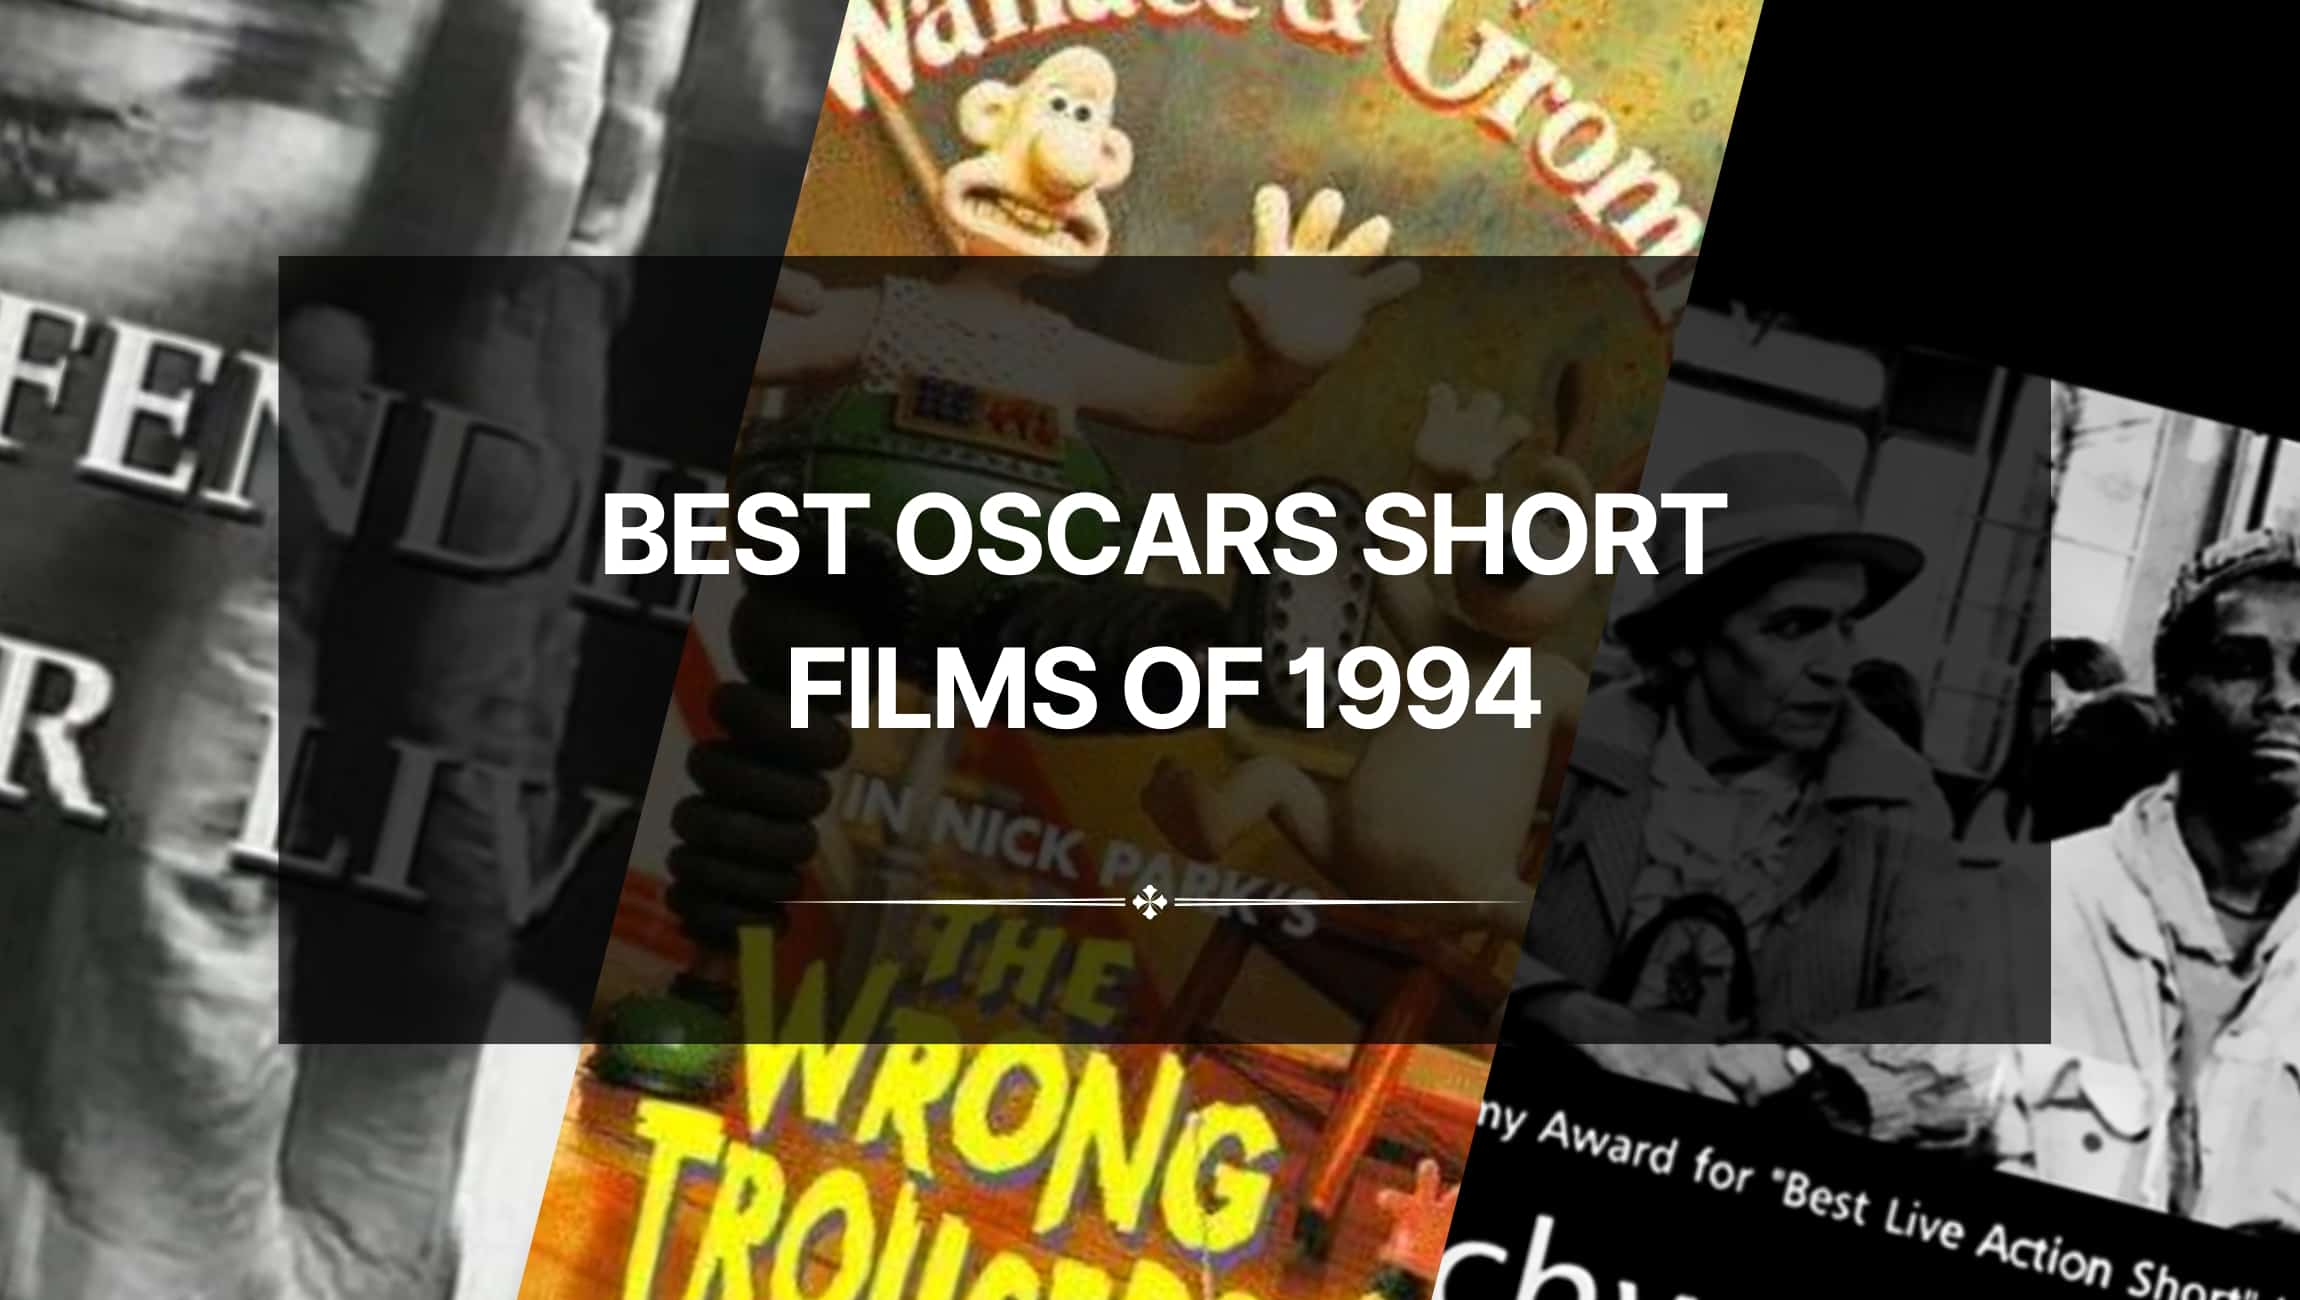 Best Oscars Short Films of 1994